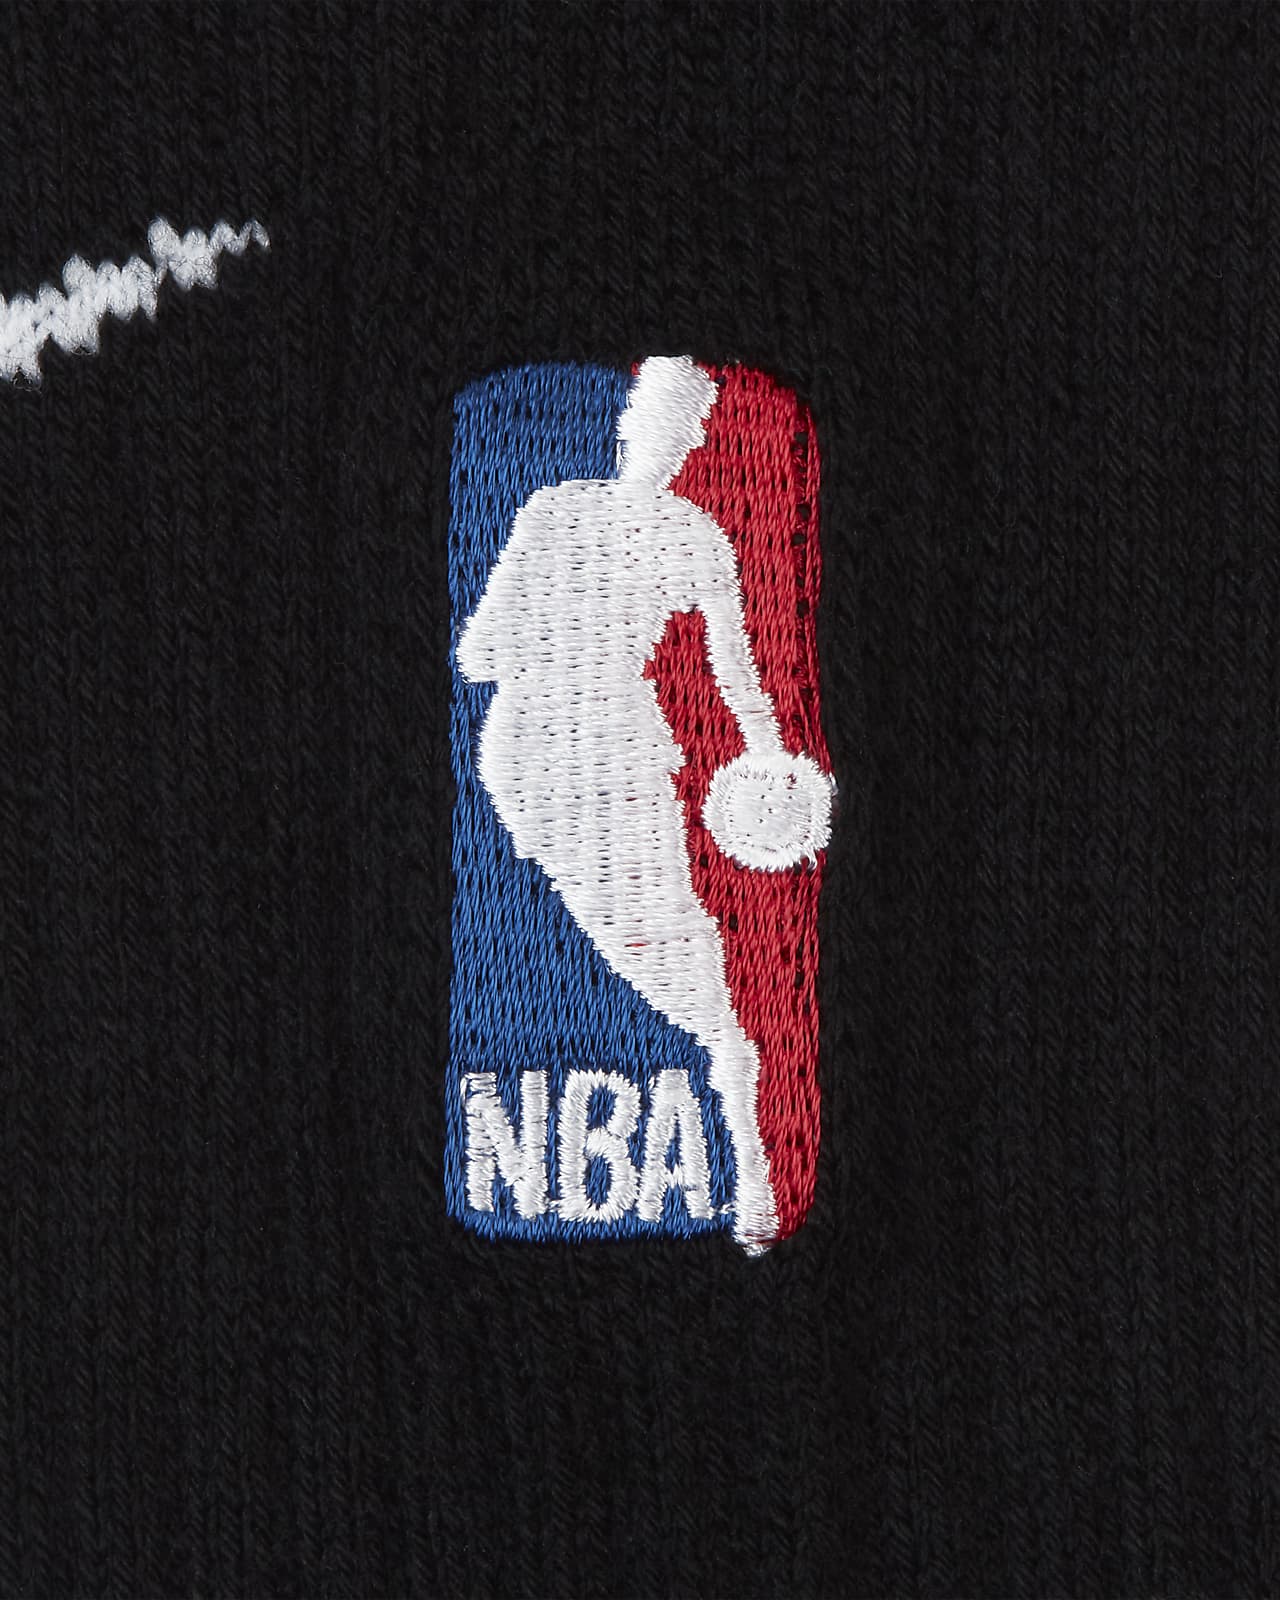 Men's NBA Nike Purple/Black Elite Performance Crew Socks